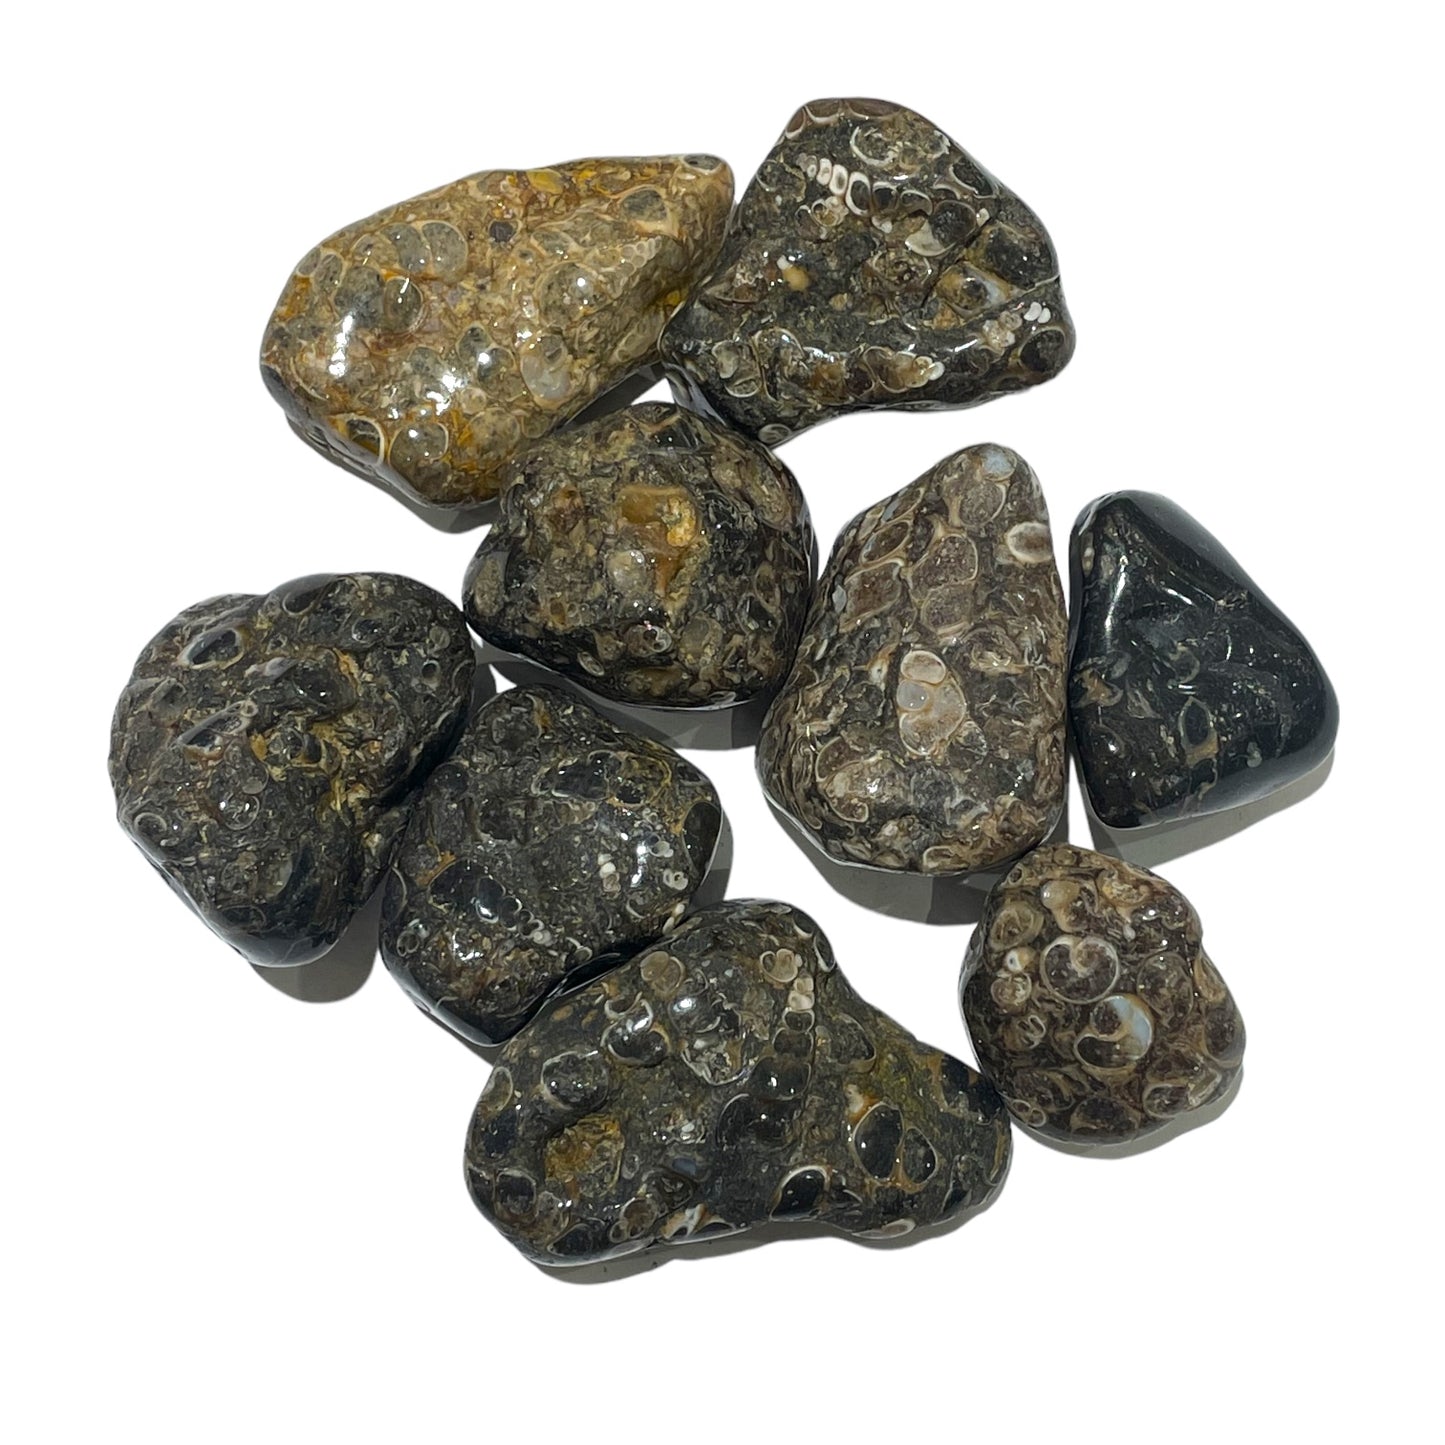 Rolled Stone Agate Turritelle